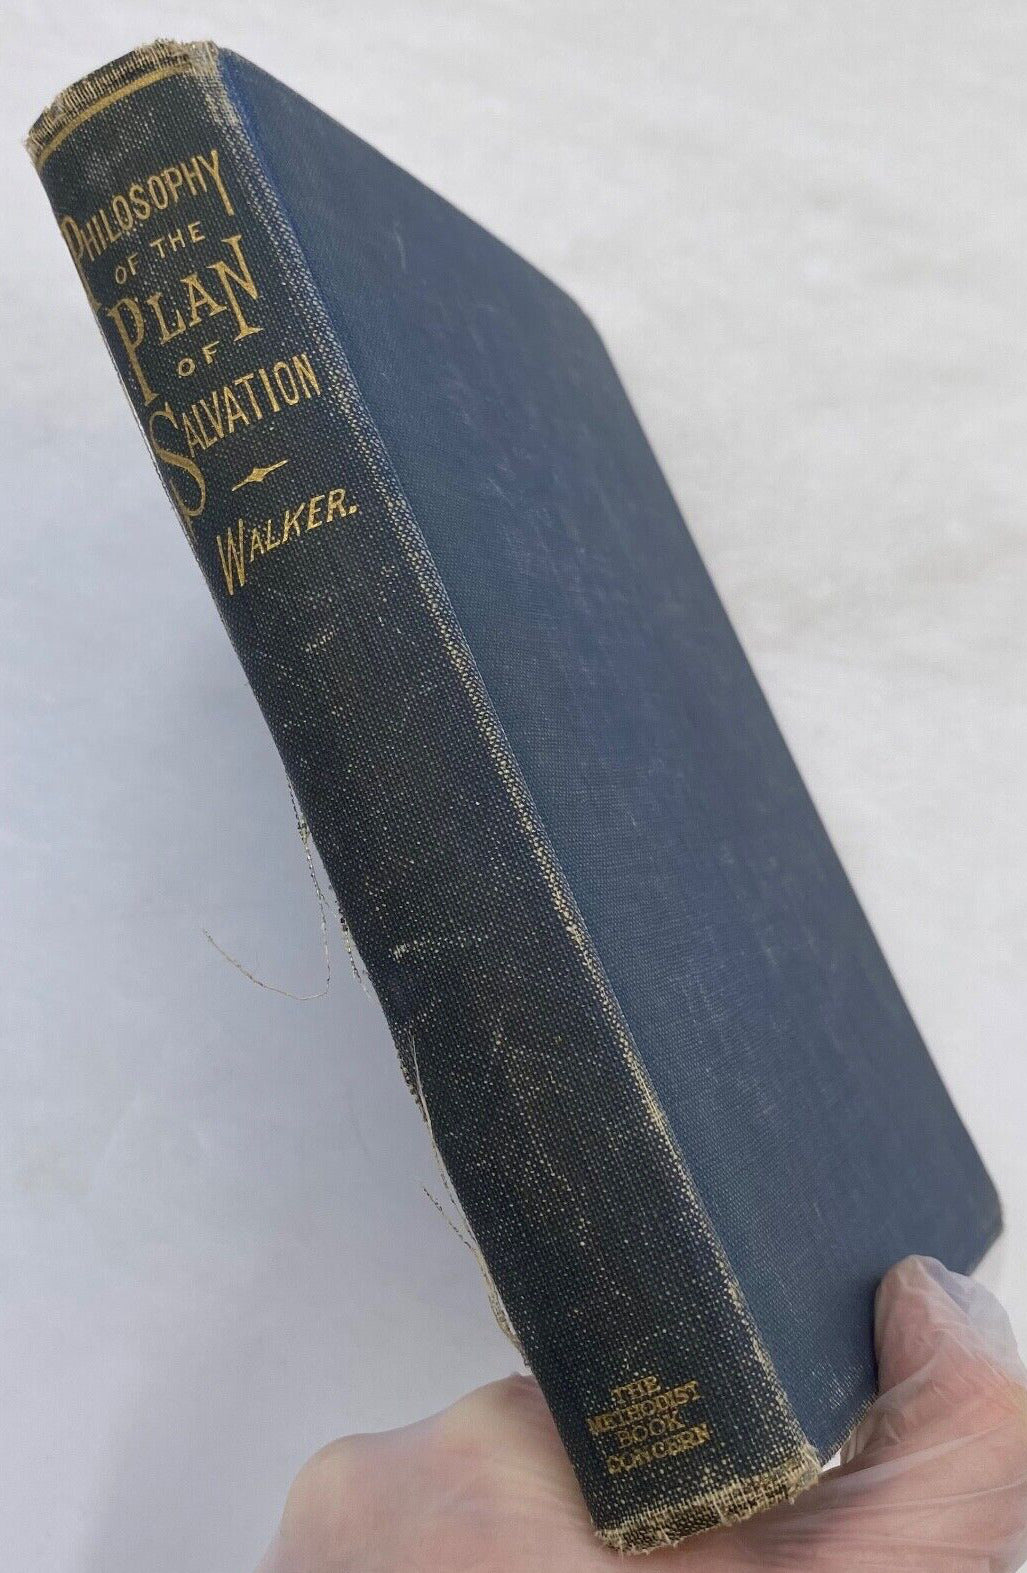 Philosophy Of The Plan Of Salvation by James B. Walker D.D. (1855)